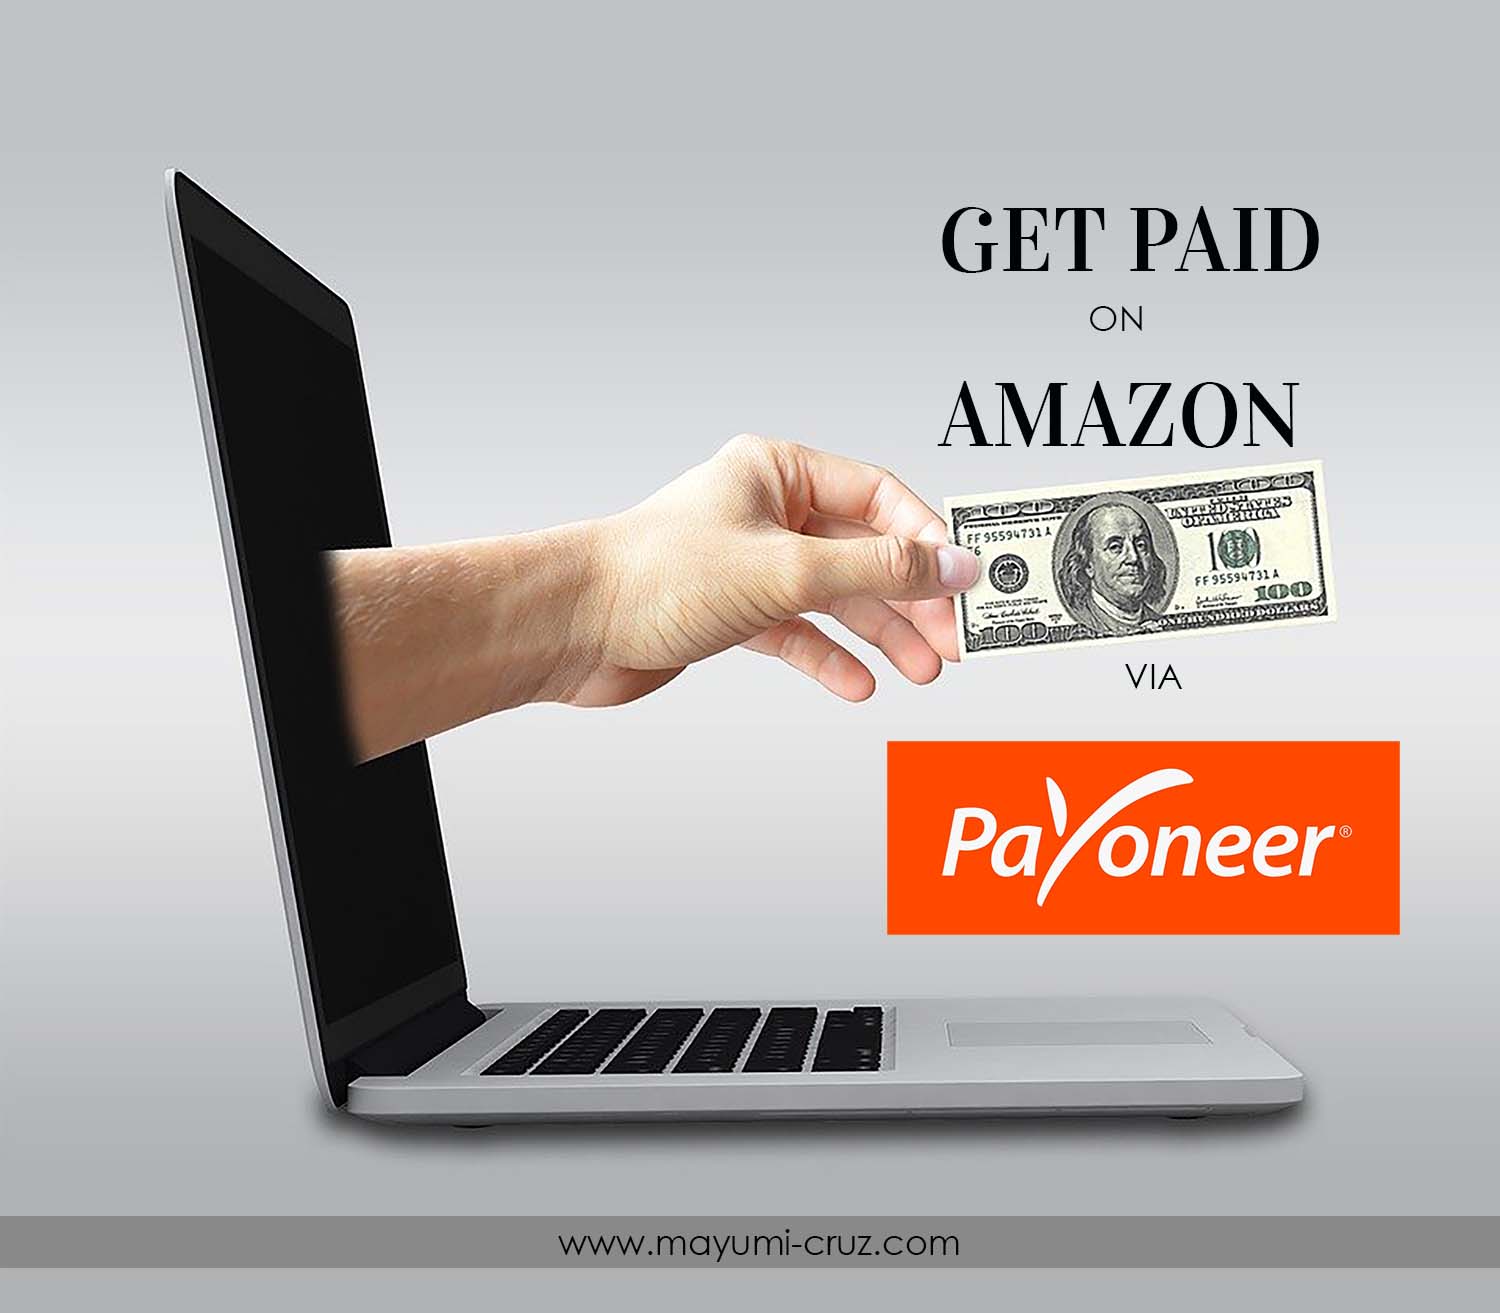 Get Paid on Amazon via Payoneer